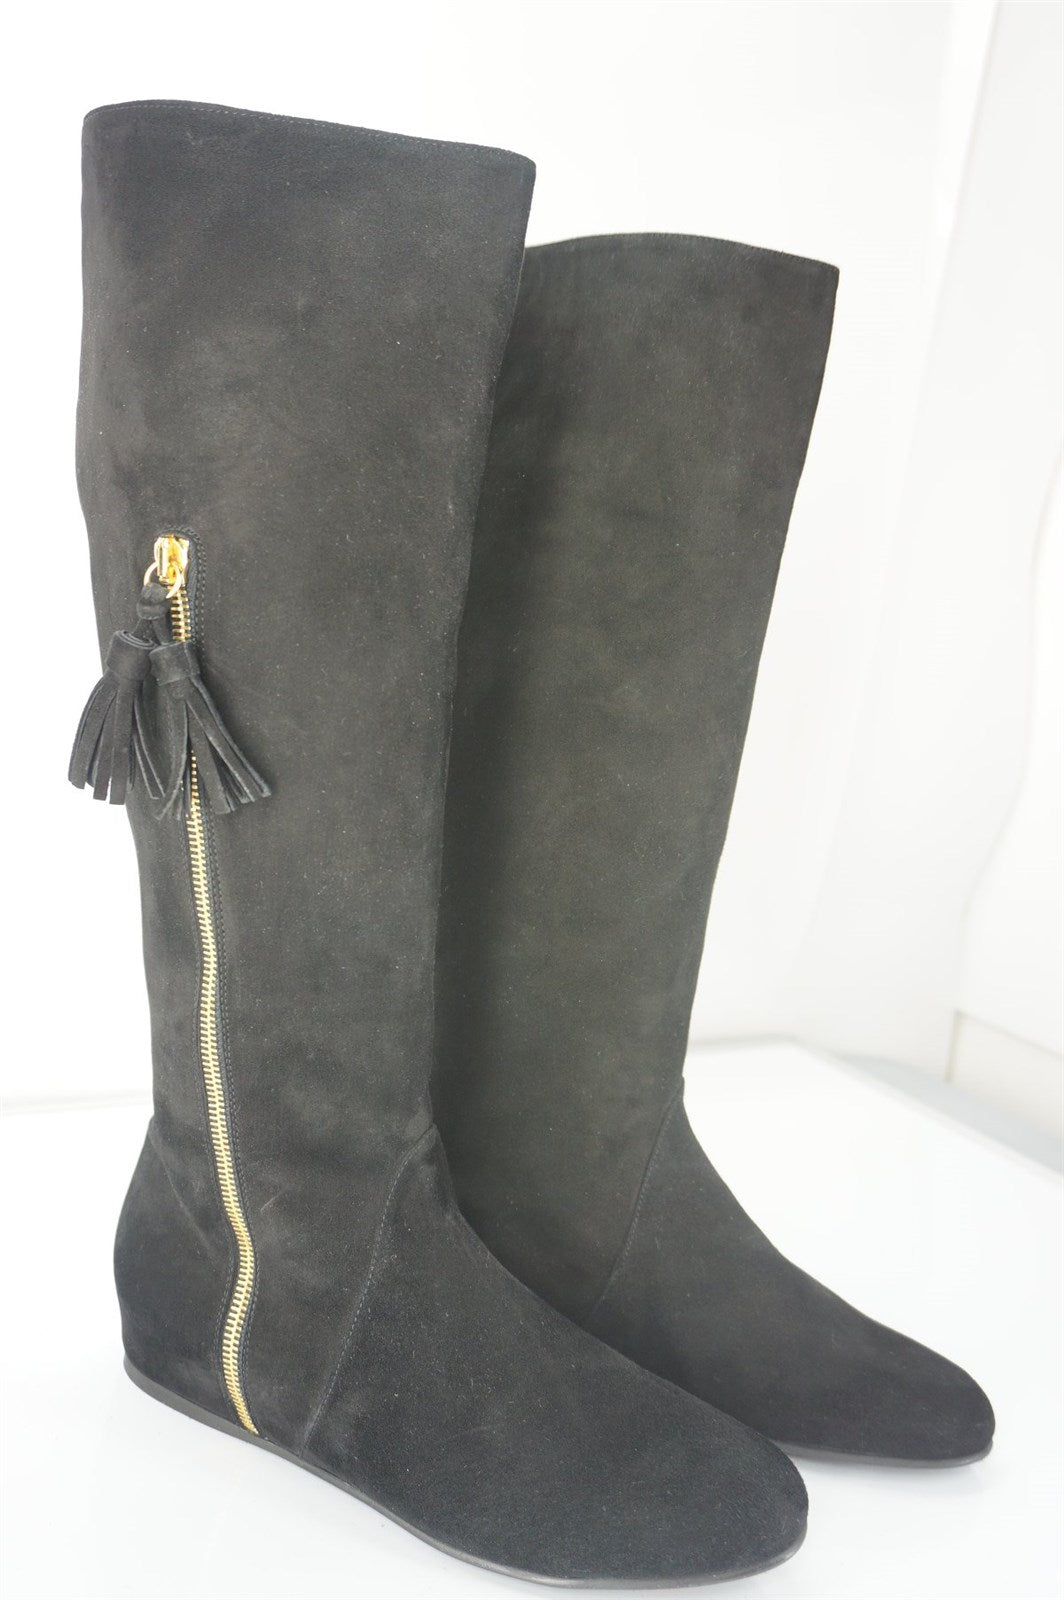 Stuart Weitzman Tass black suede wedge Tall boots size 6.5 New $635 gold zip